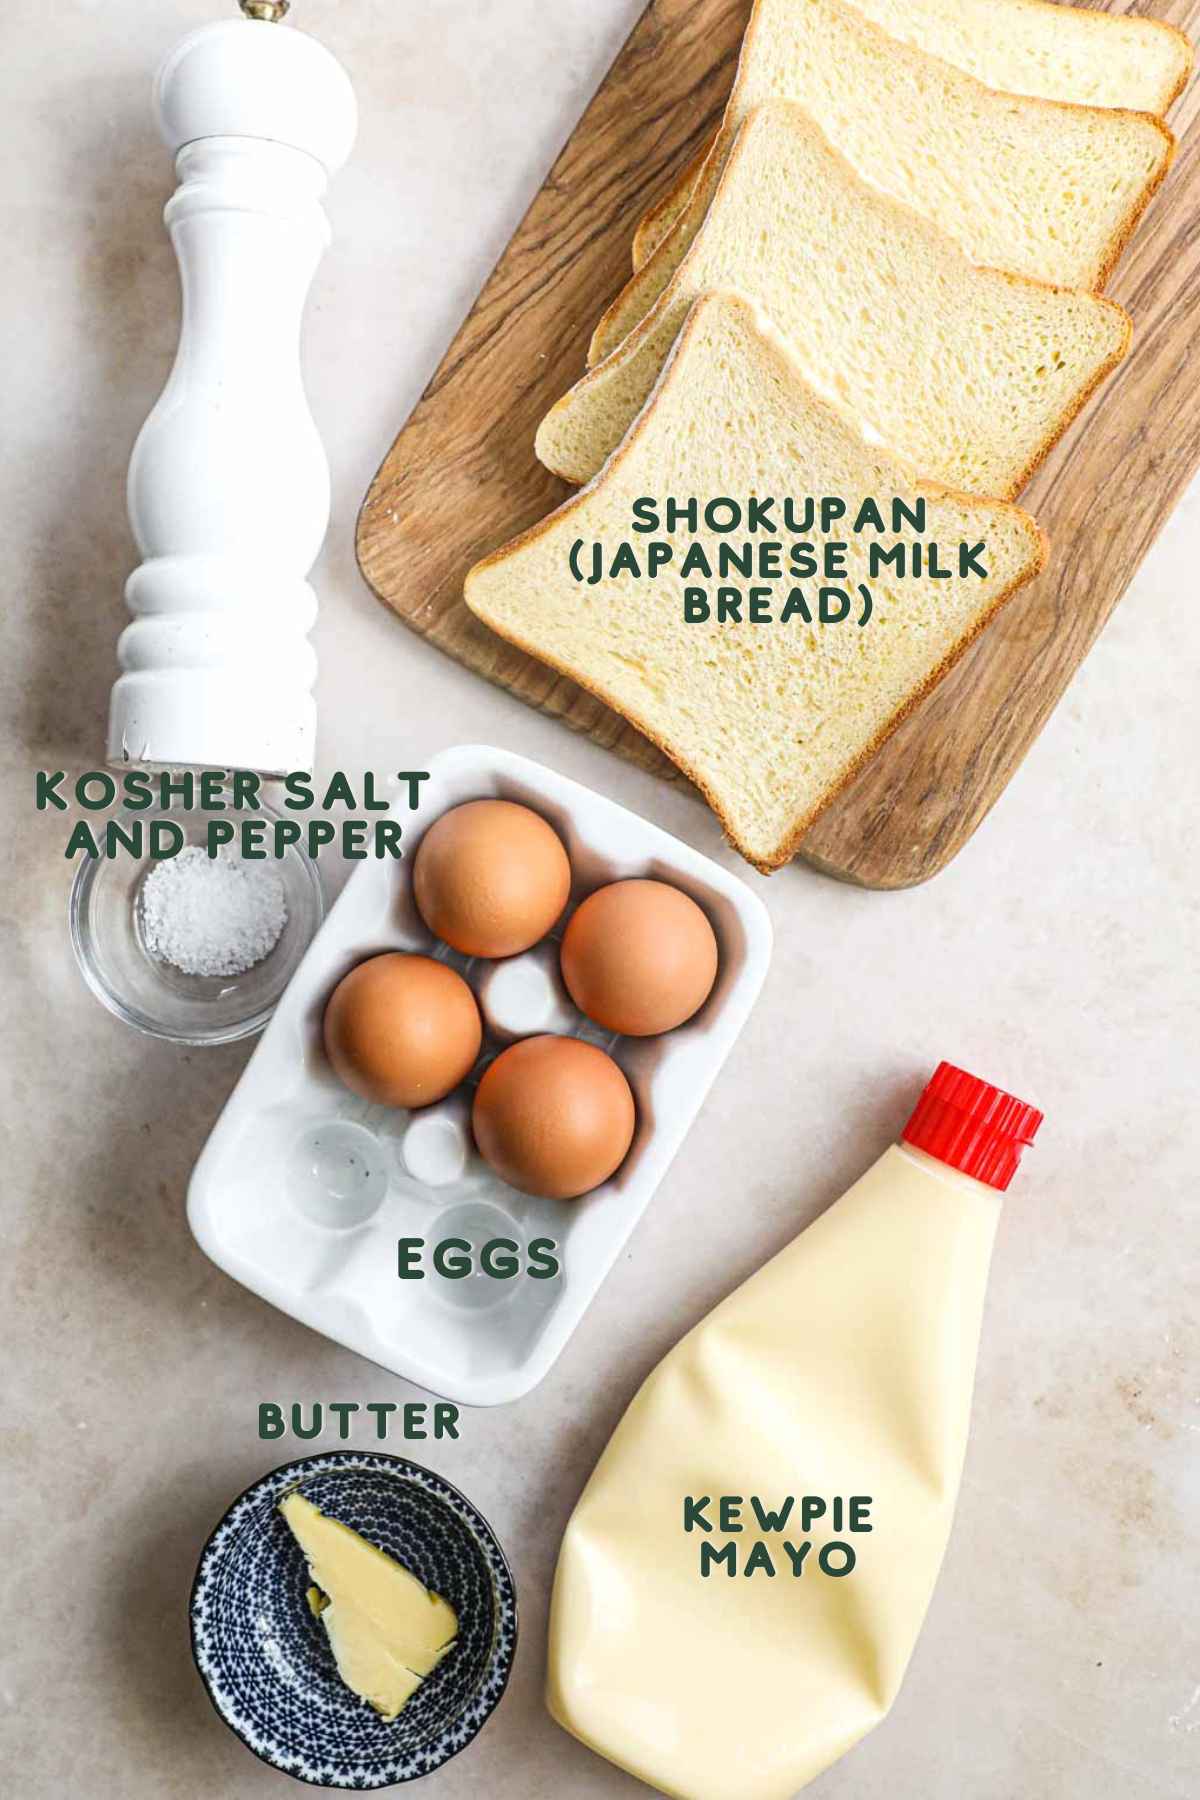 Ingredients to make tamago sando (Japanese egg salad sandwich), including shokupan, salt and pepper, pasture-raised eggs, Kewpie mayo, and butter.